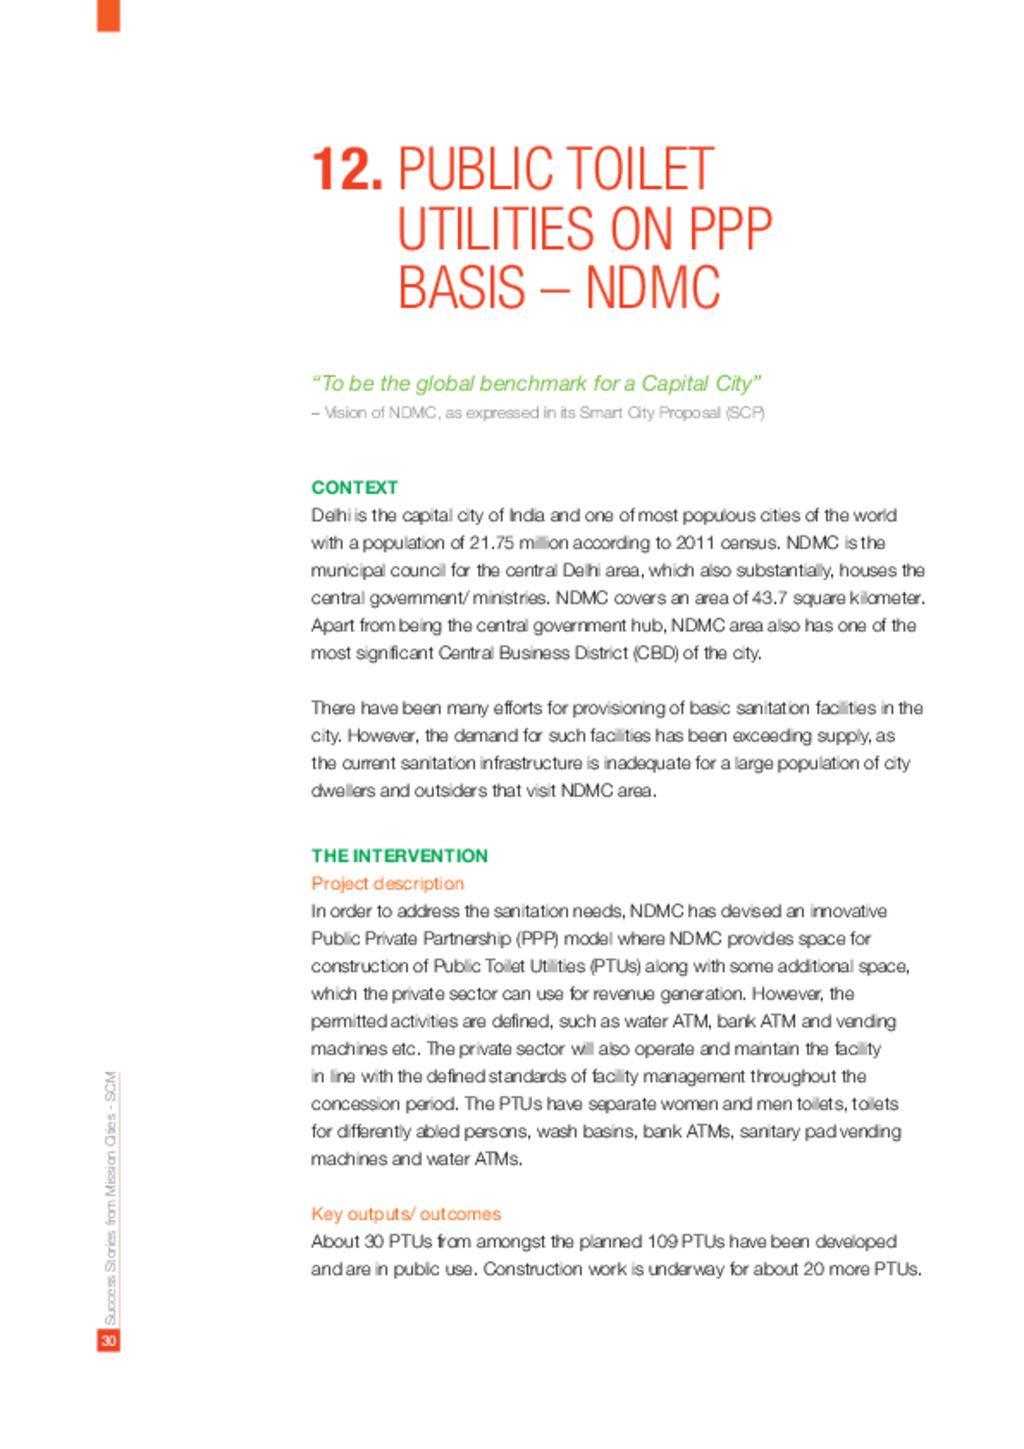 Public Toilet Utilities on PPP Basis - NDMC